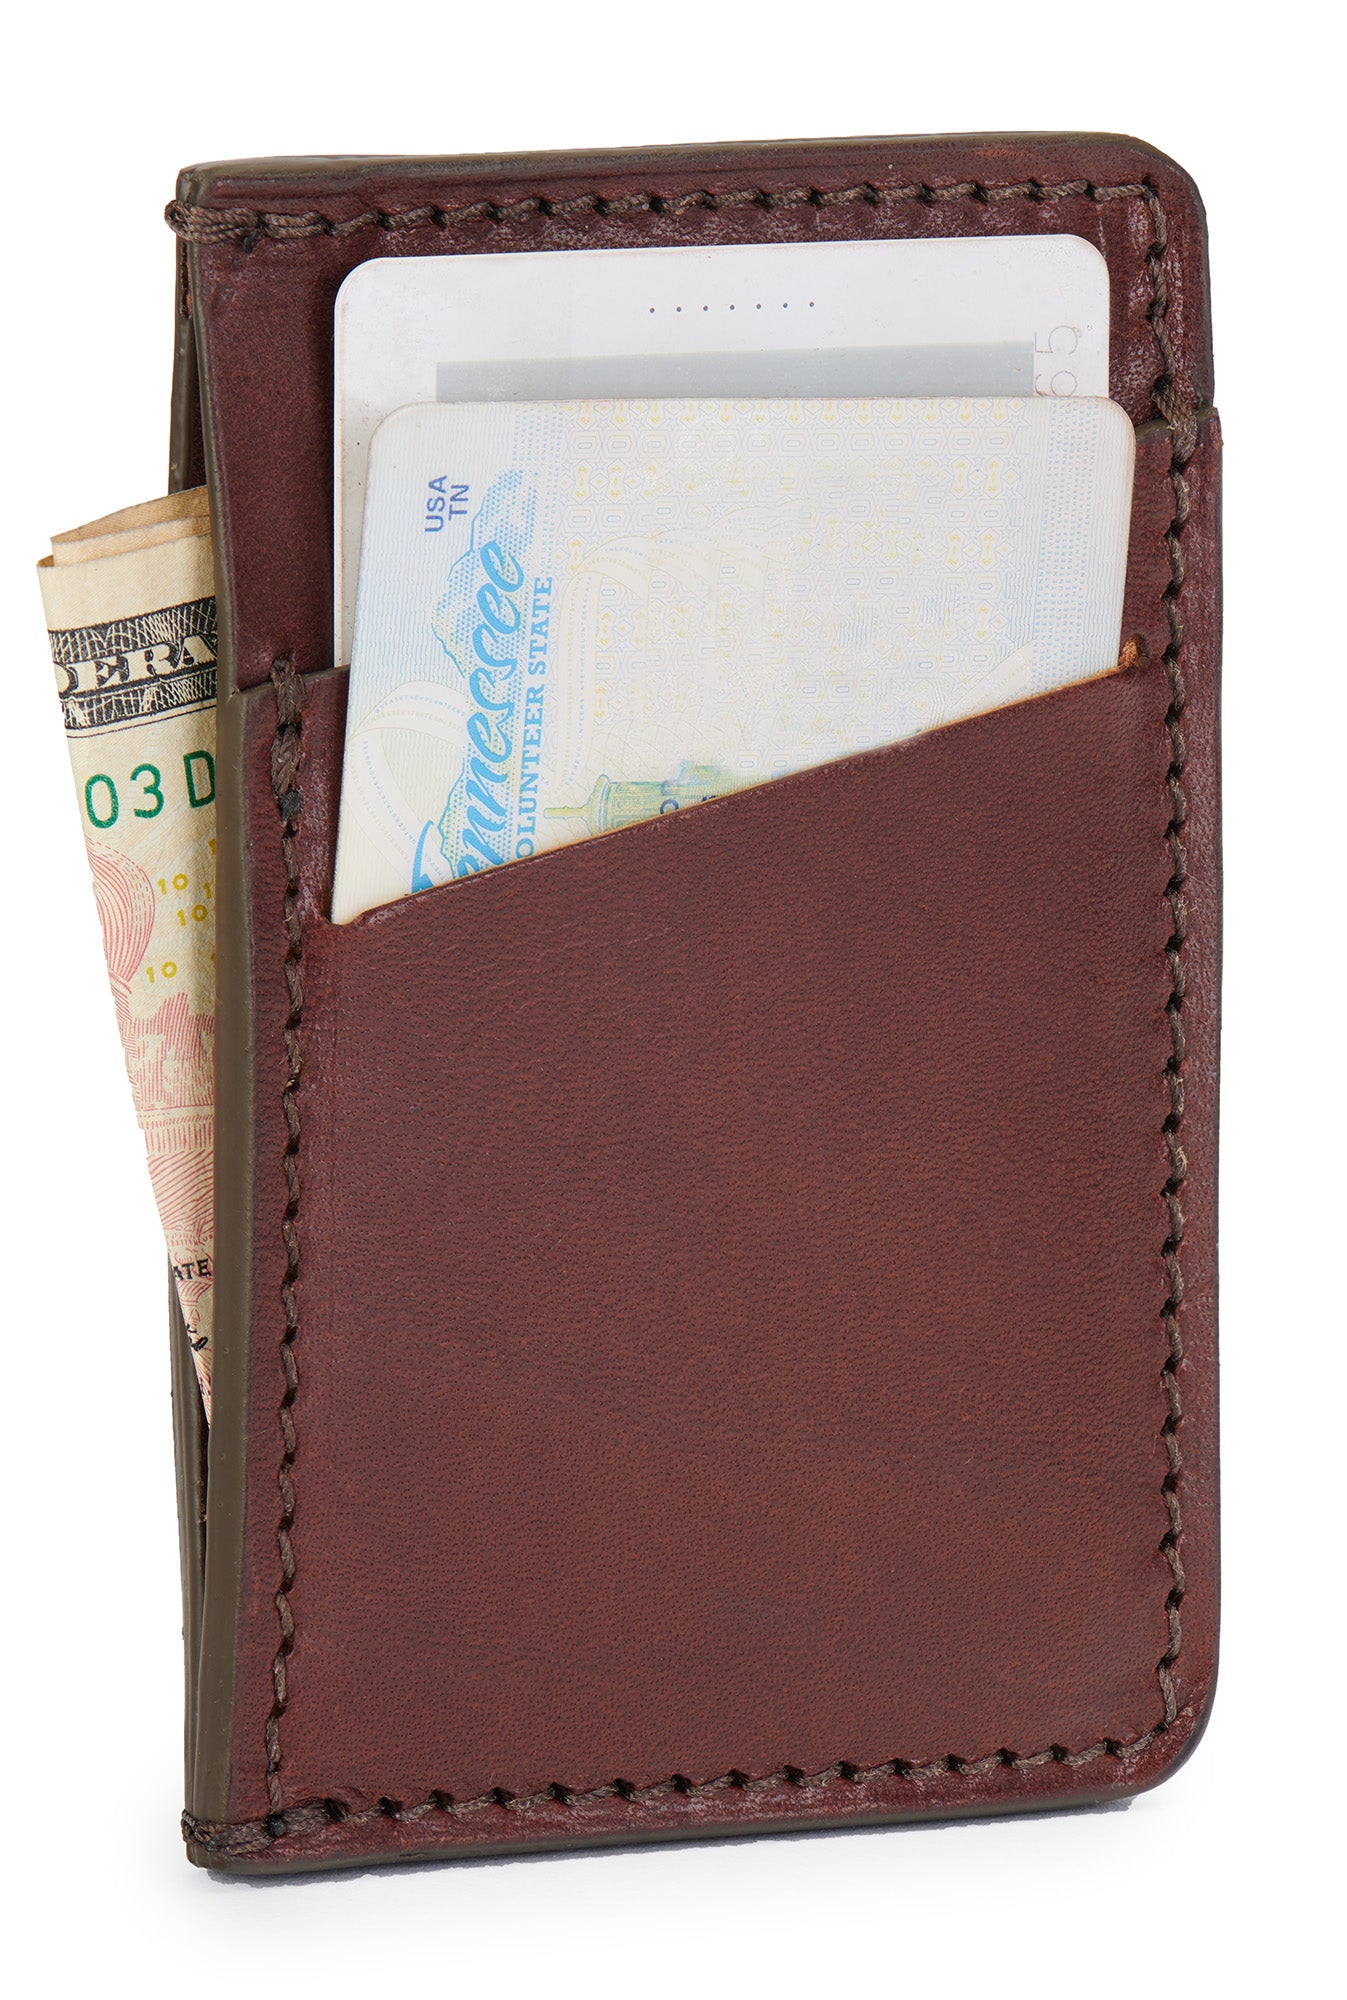 Jackson Wayne minimalist wallet full grain vegetable tanned leather in vintage brown color